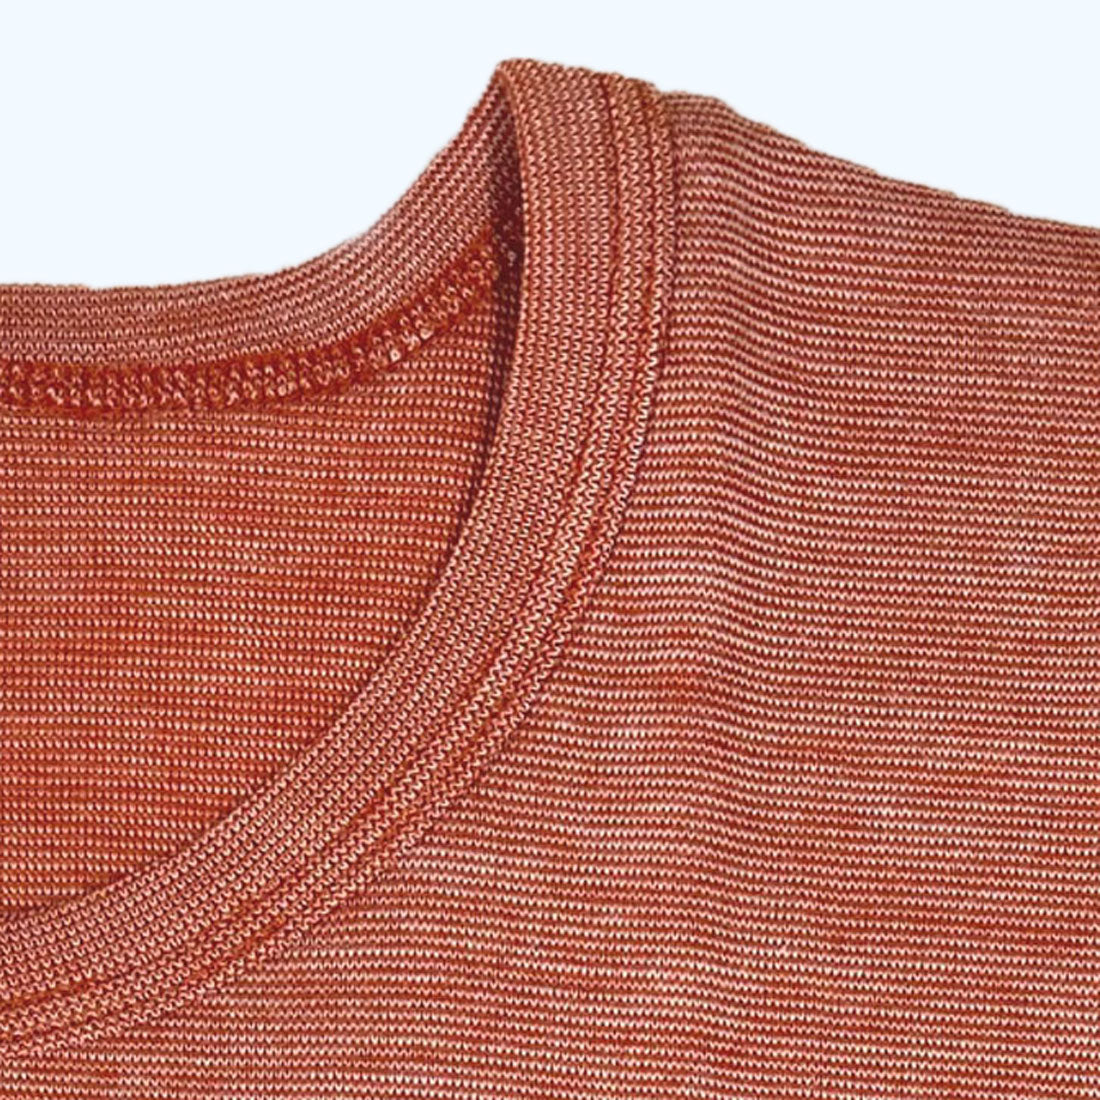 HOCOSA Kids' Short-Sleeve Shirt in Organic Cotton/Wool/Silk